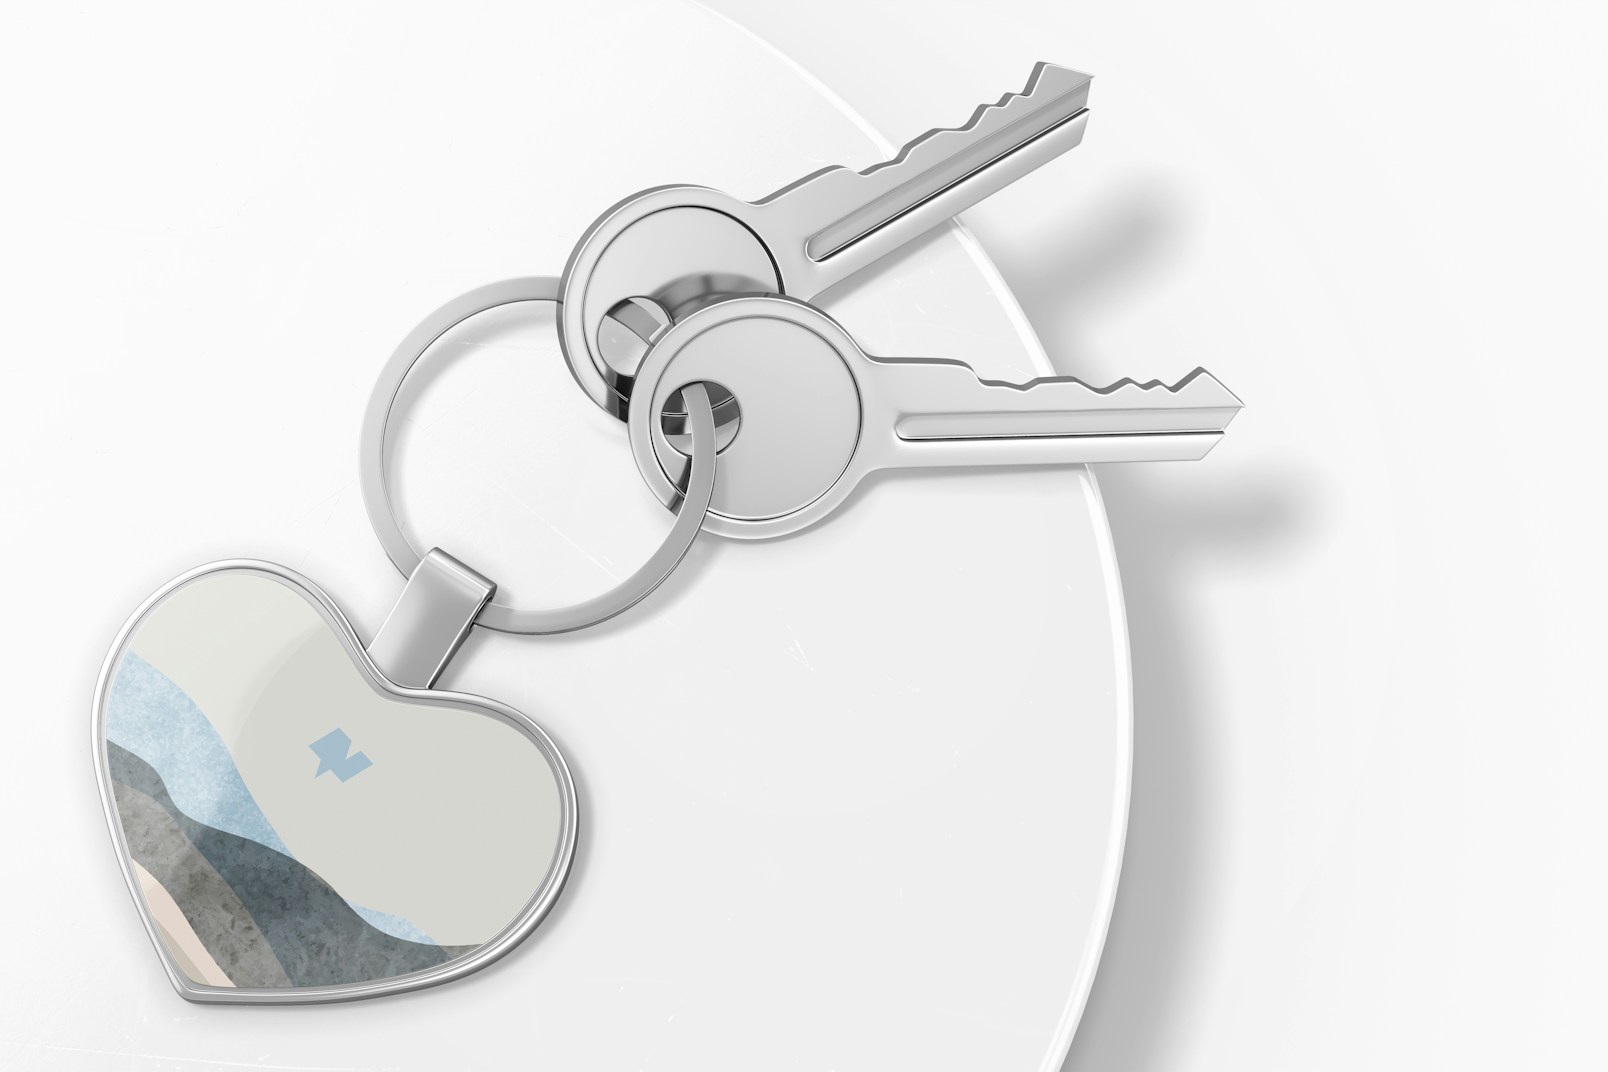 Metallic Heart Shaped Keychain Mockup, Top View